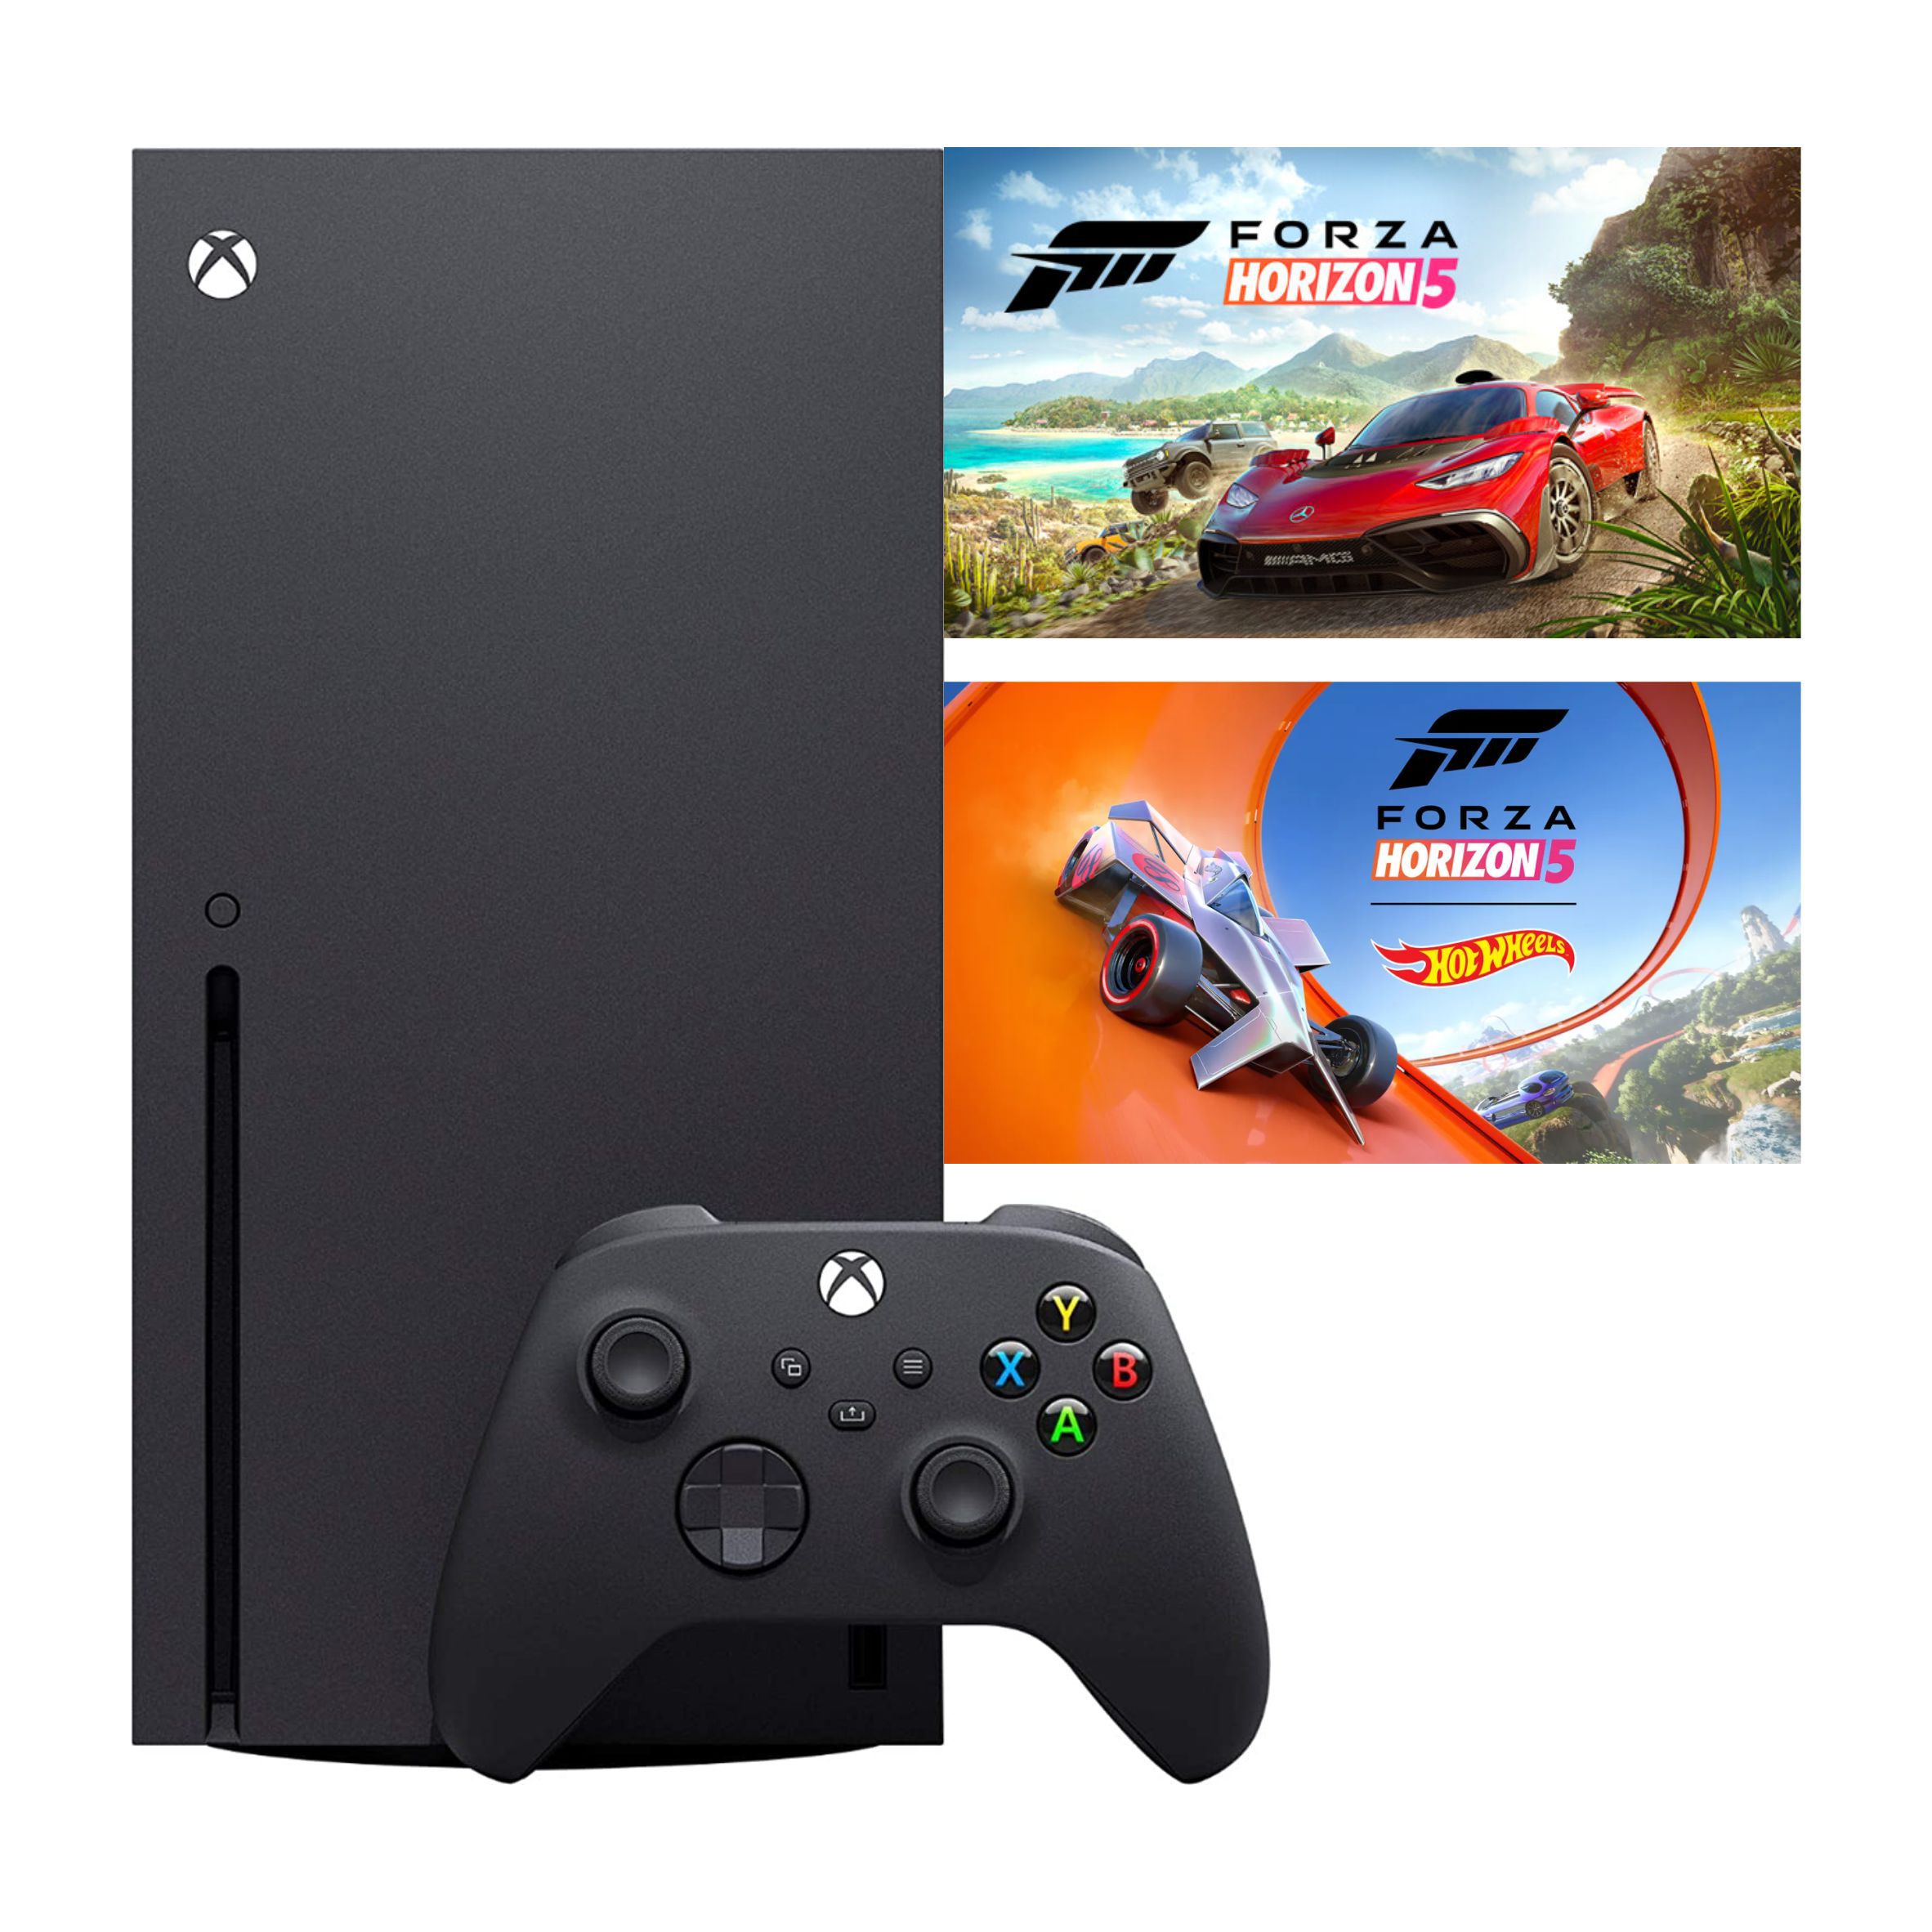 Forza Horizon 1 Trailer 2012 E3 (HD XBOX 360 PC)